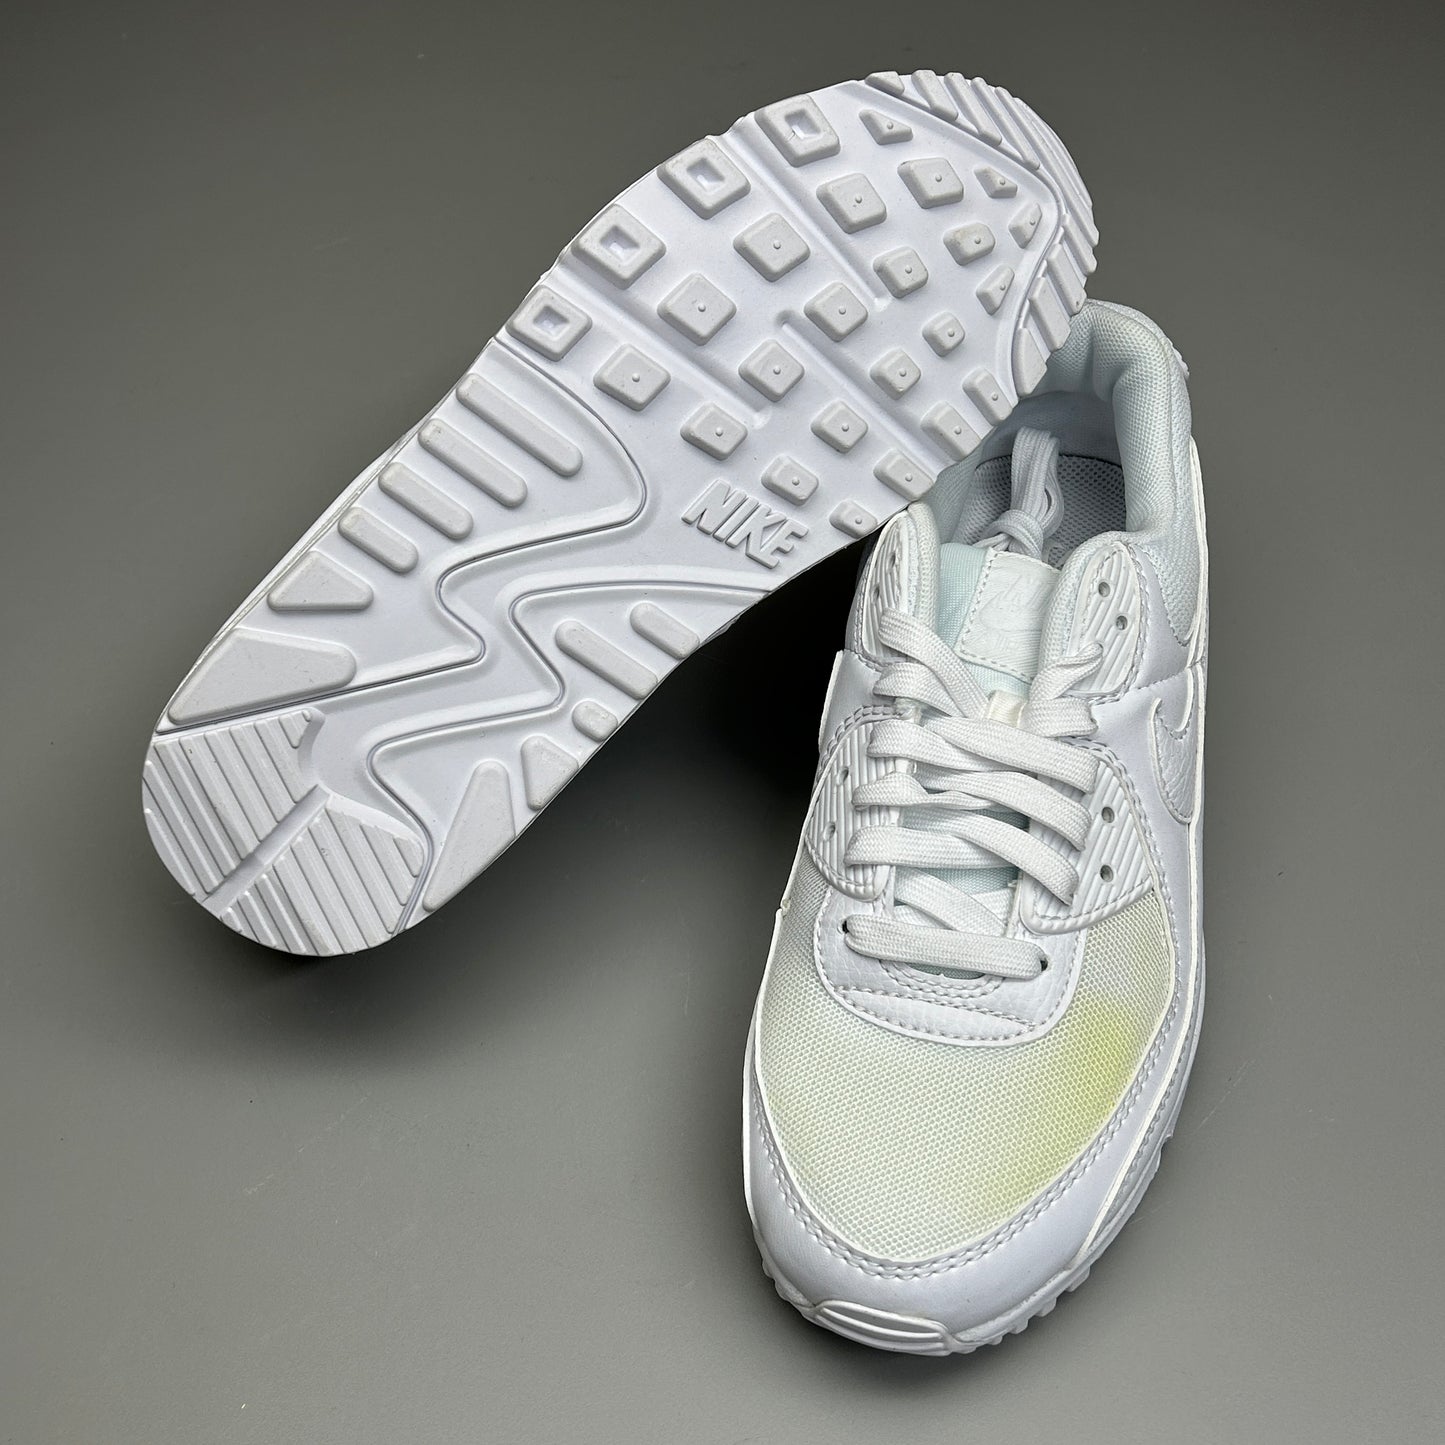 NIKE Nike Air Max 90 Women's Shoes Sz 7.5 White DH8010-100 (New, Damaged)